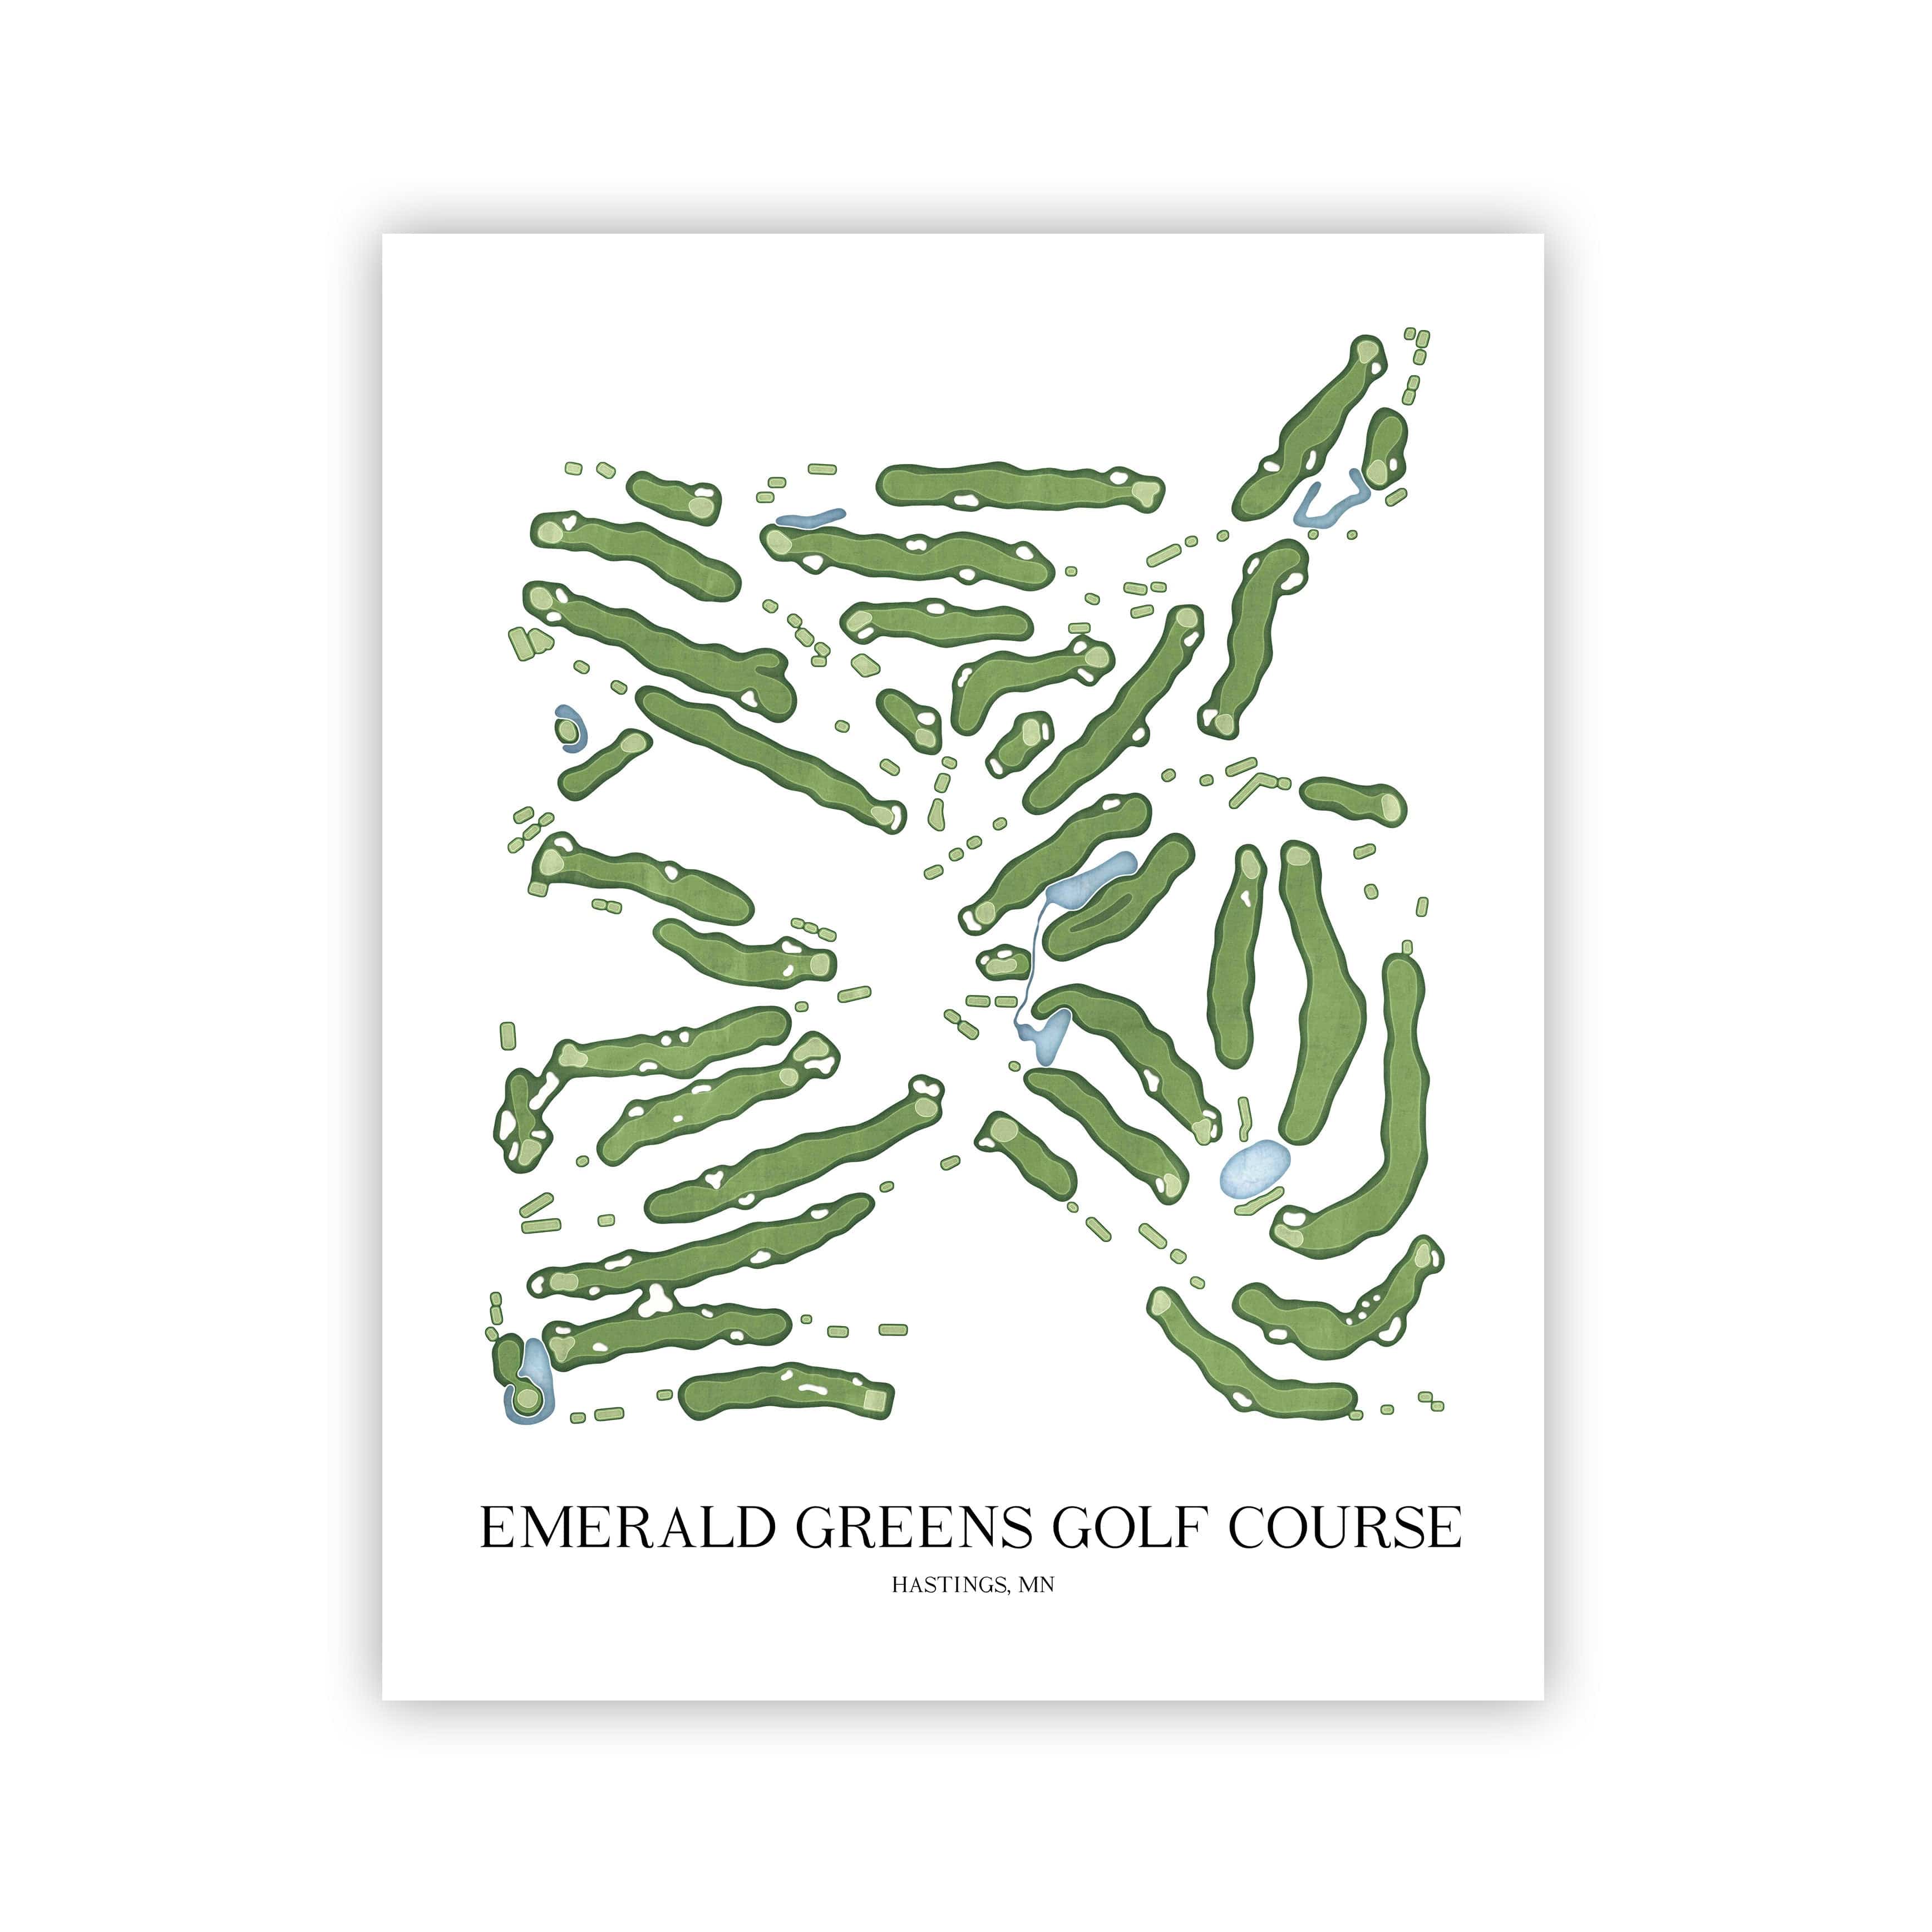 The 19th Hole Golf Shop - Golf Course Prints -  Emerald Greens Golf Course Golf Course Map